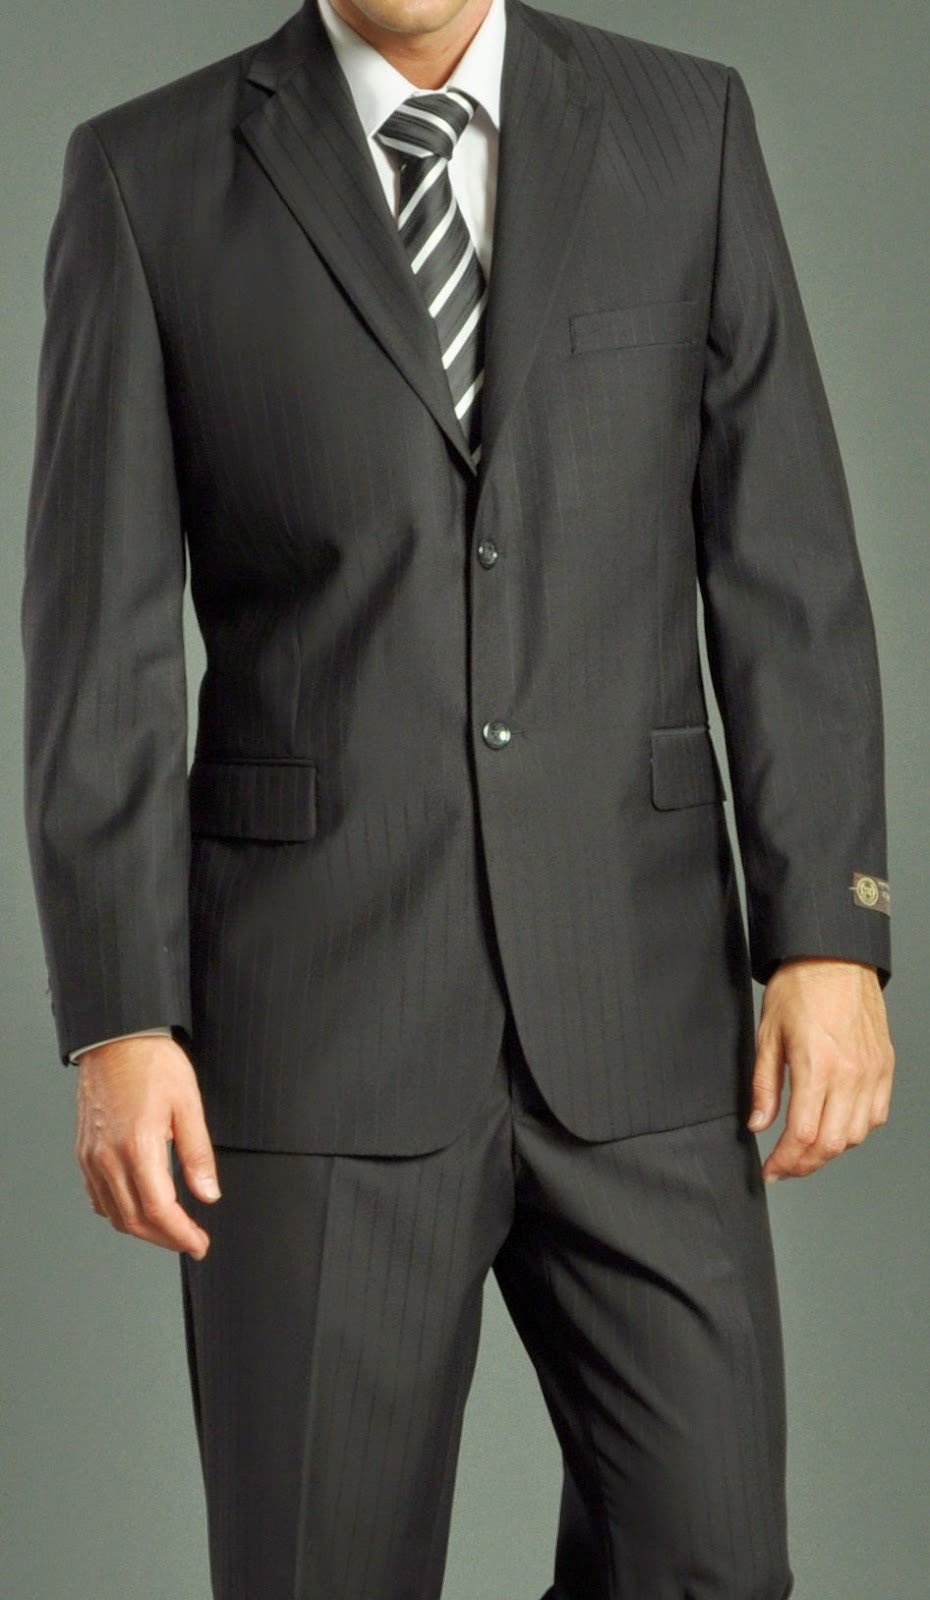 suit2suit: Men's Big and Tall Suits